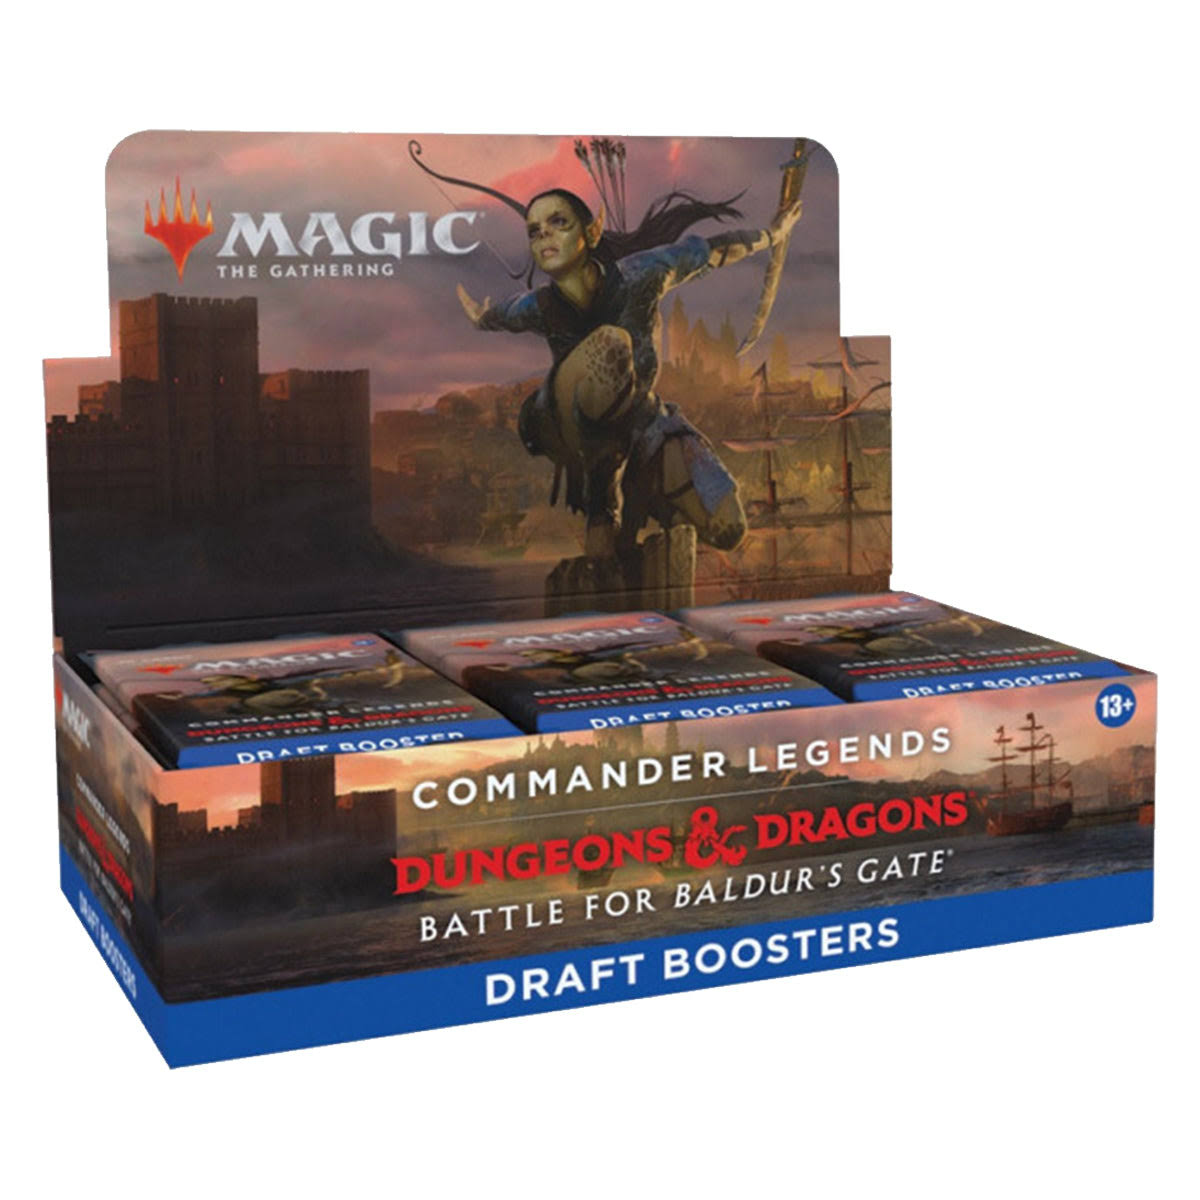 Magic The Gathering - Commander Legends - Battle for Baldur's Gate Draft Booster Box